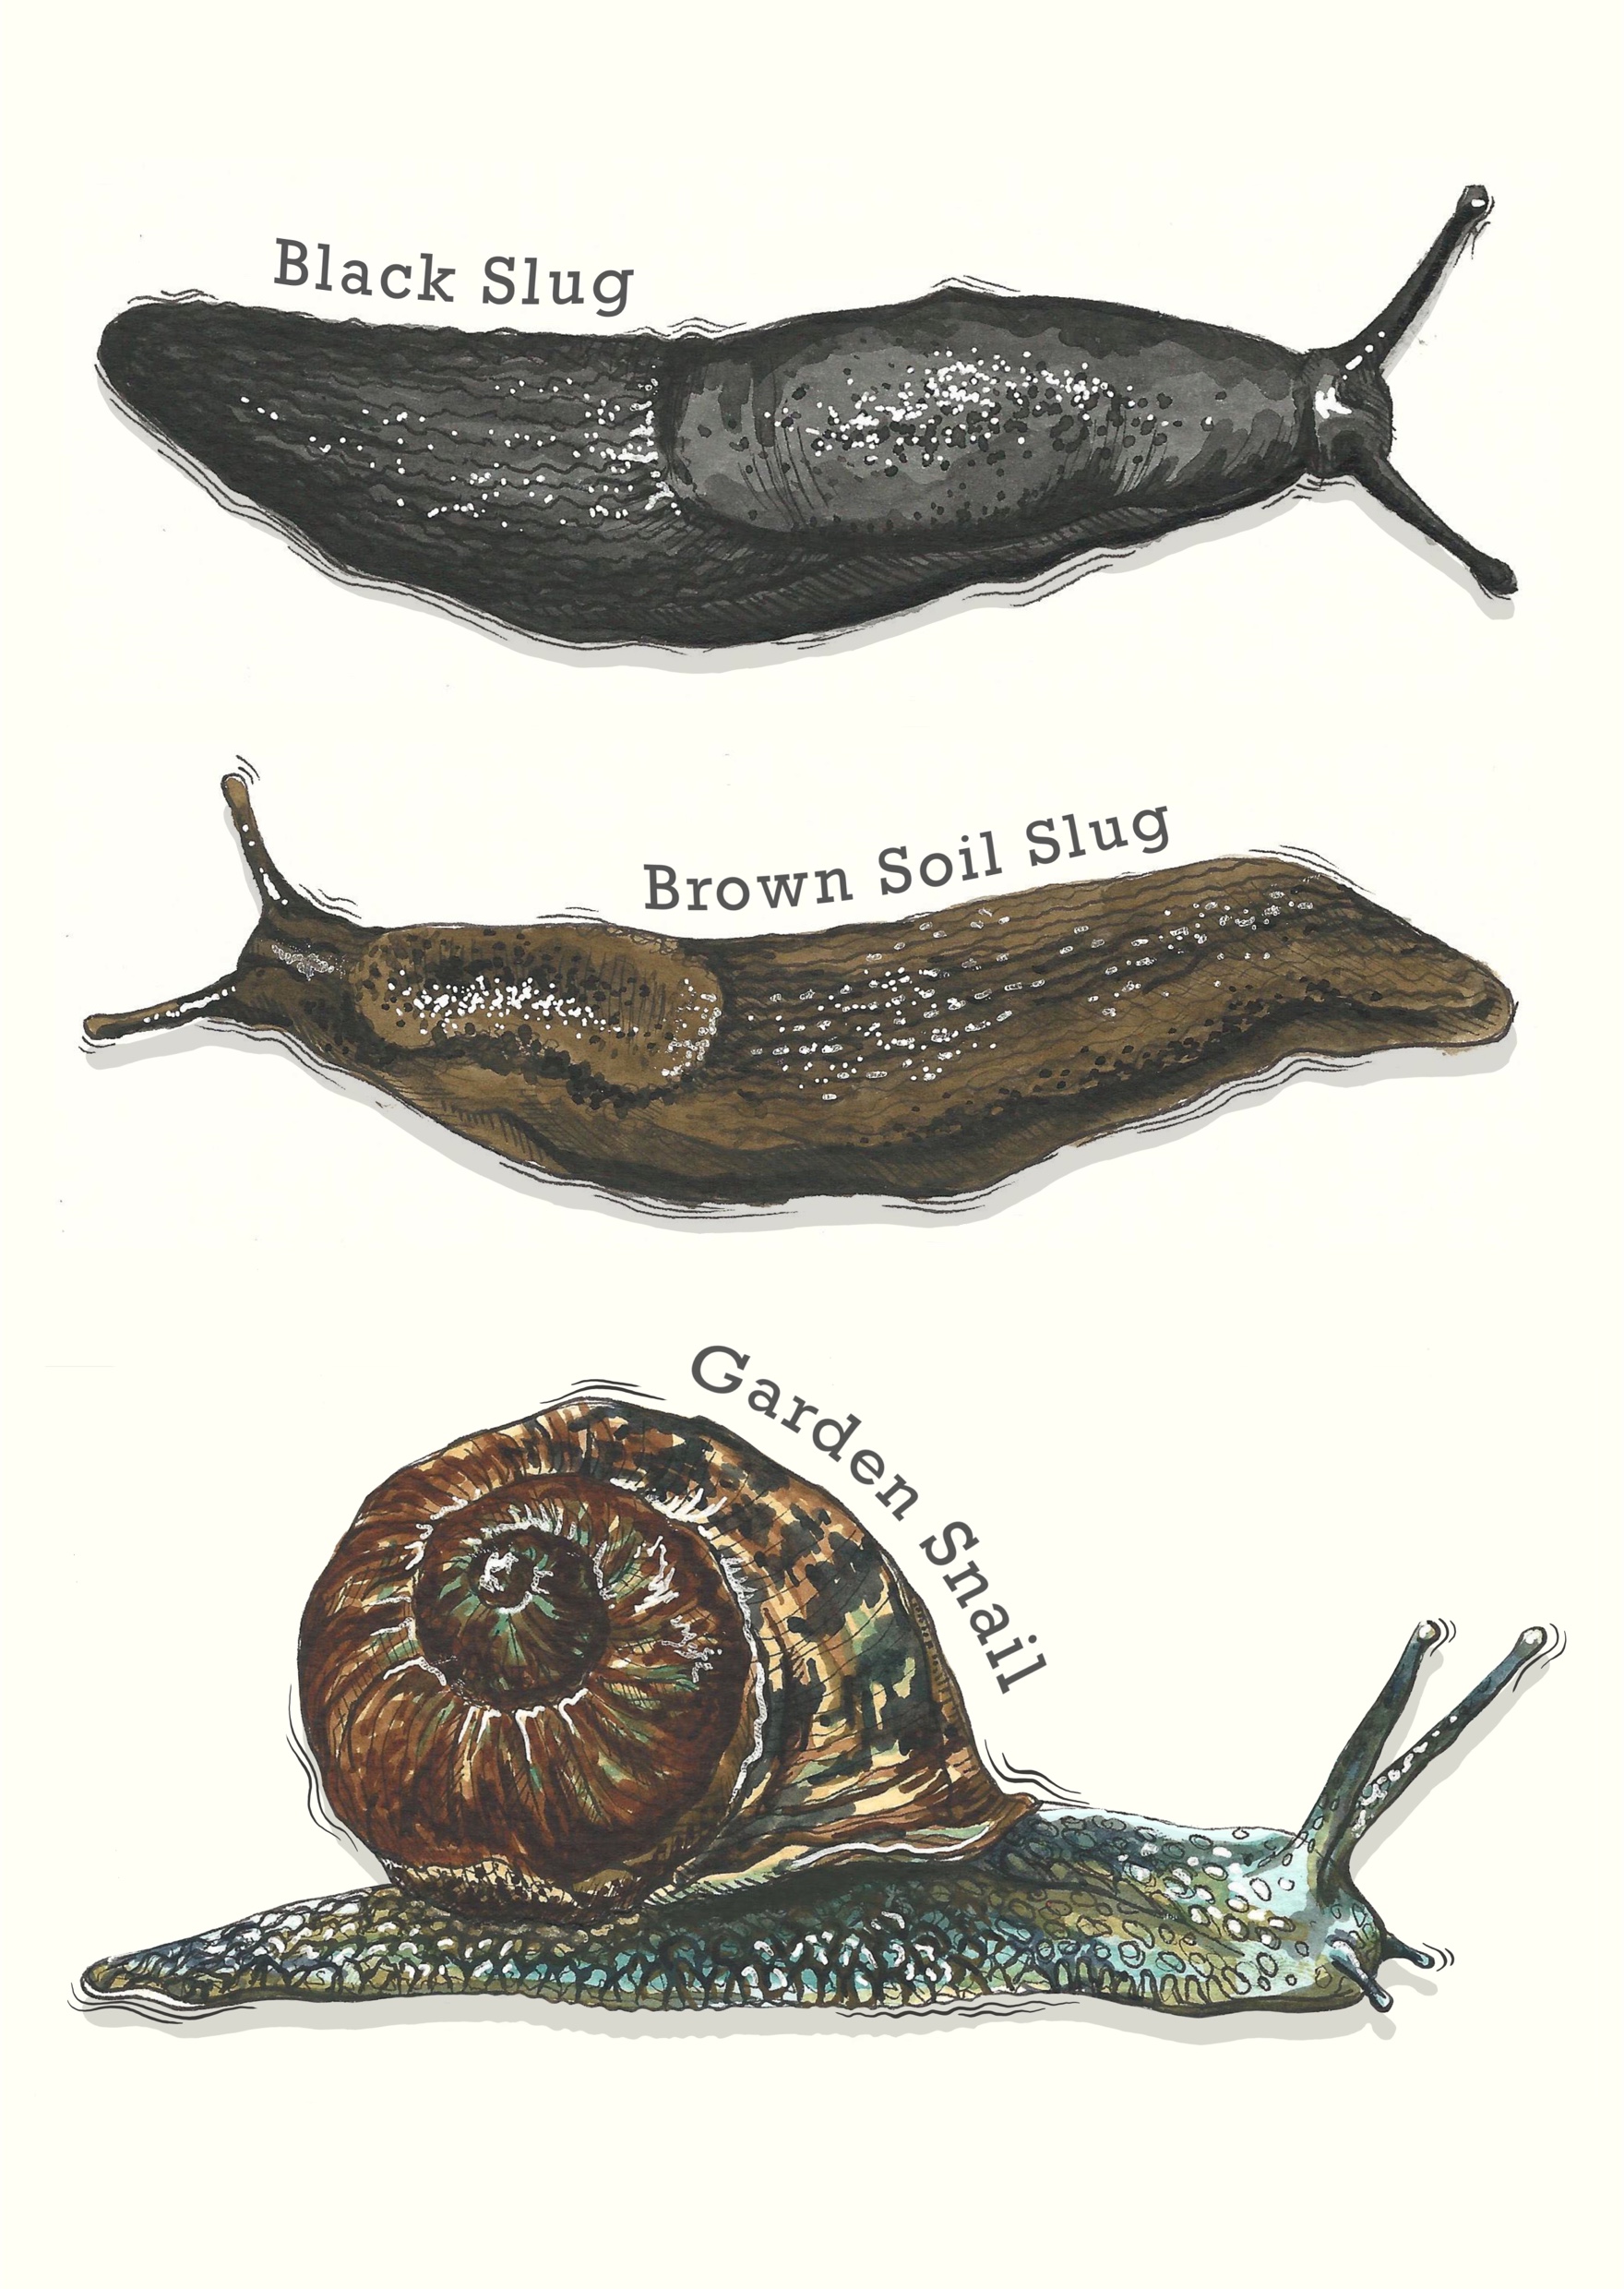 Illustration by Grace Bastion showing three mollusc species: the Black Slug, the Brown Soil Slug and the Garden Snail.